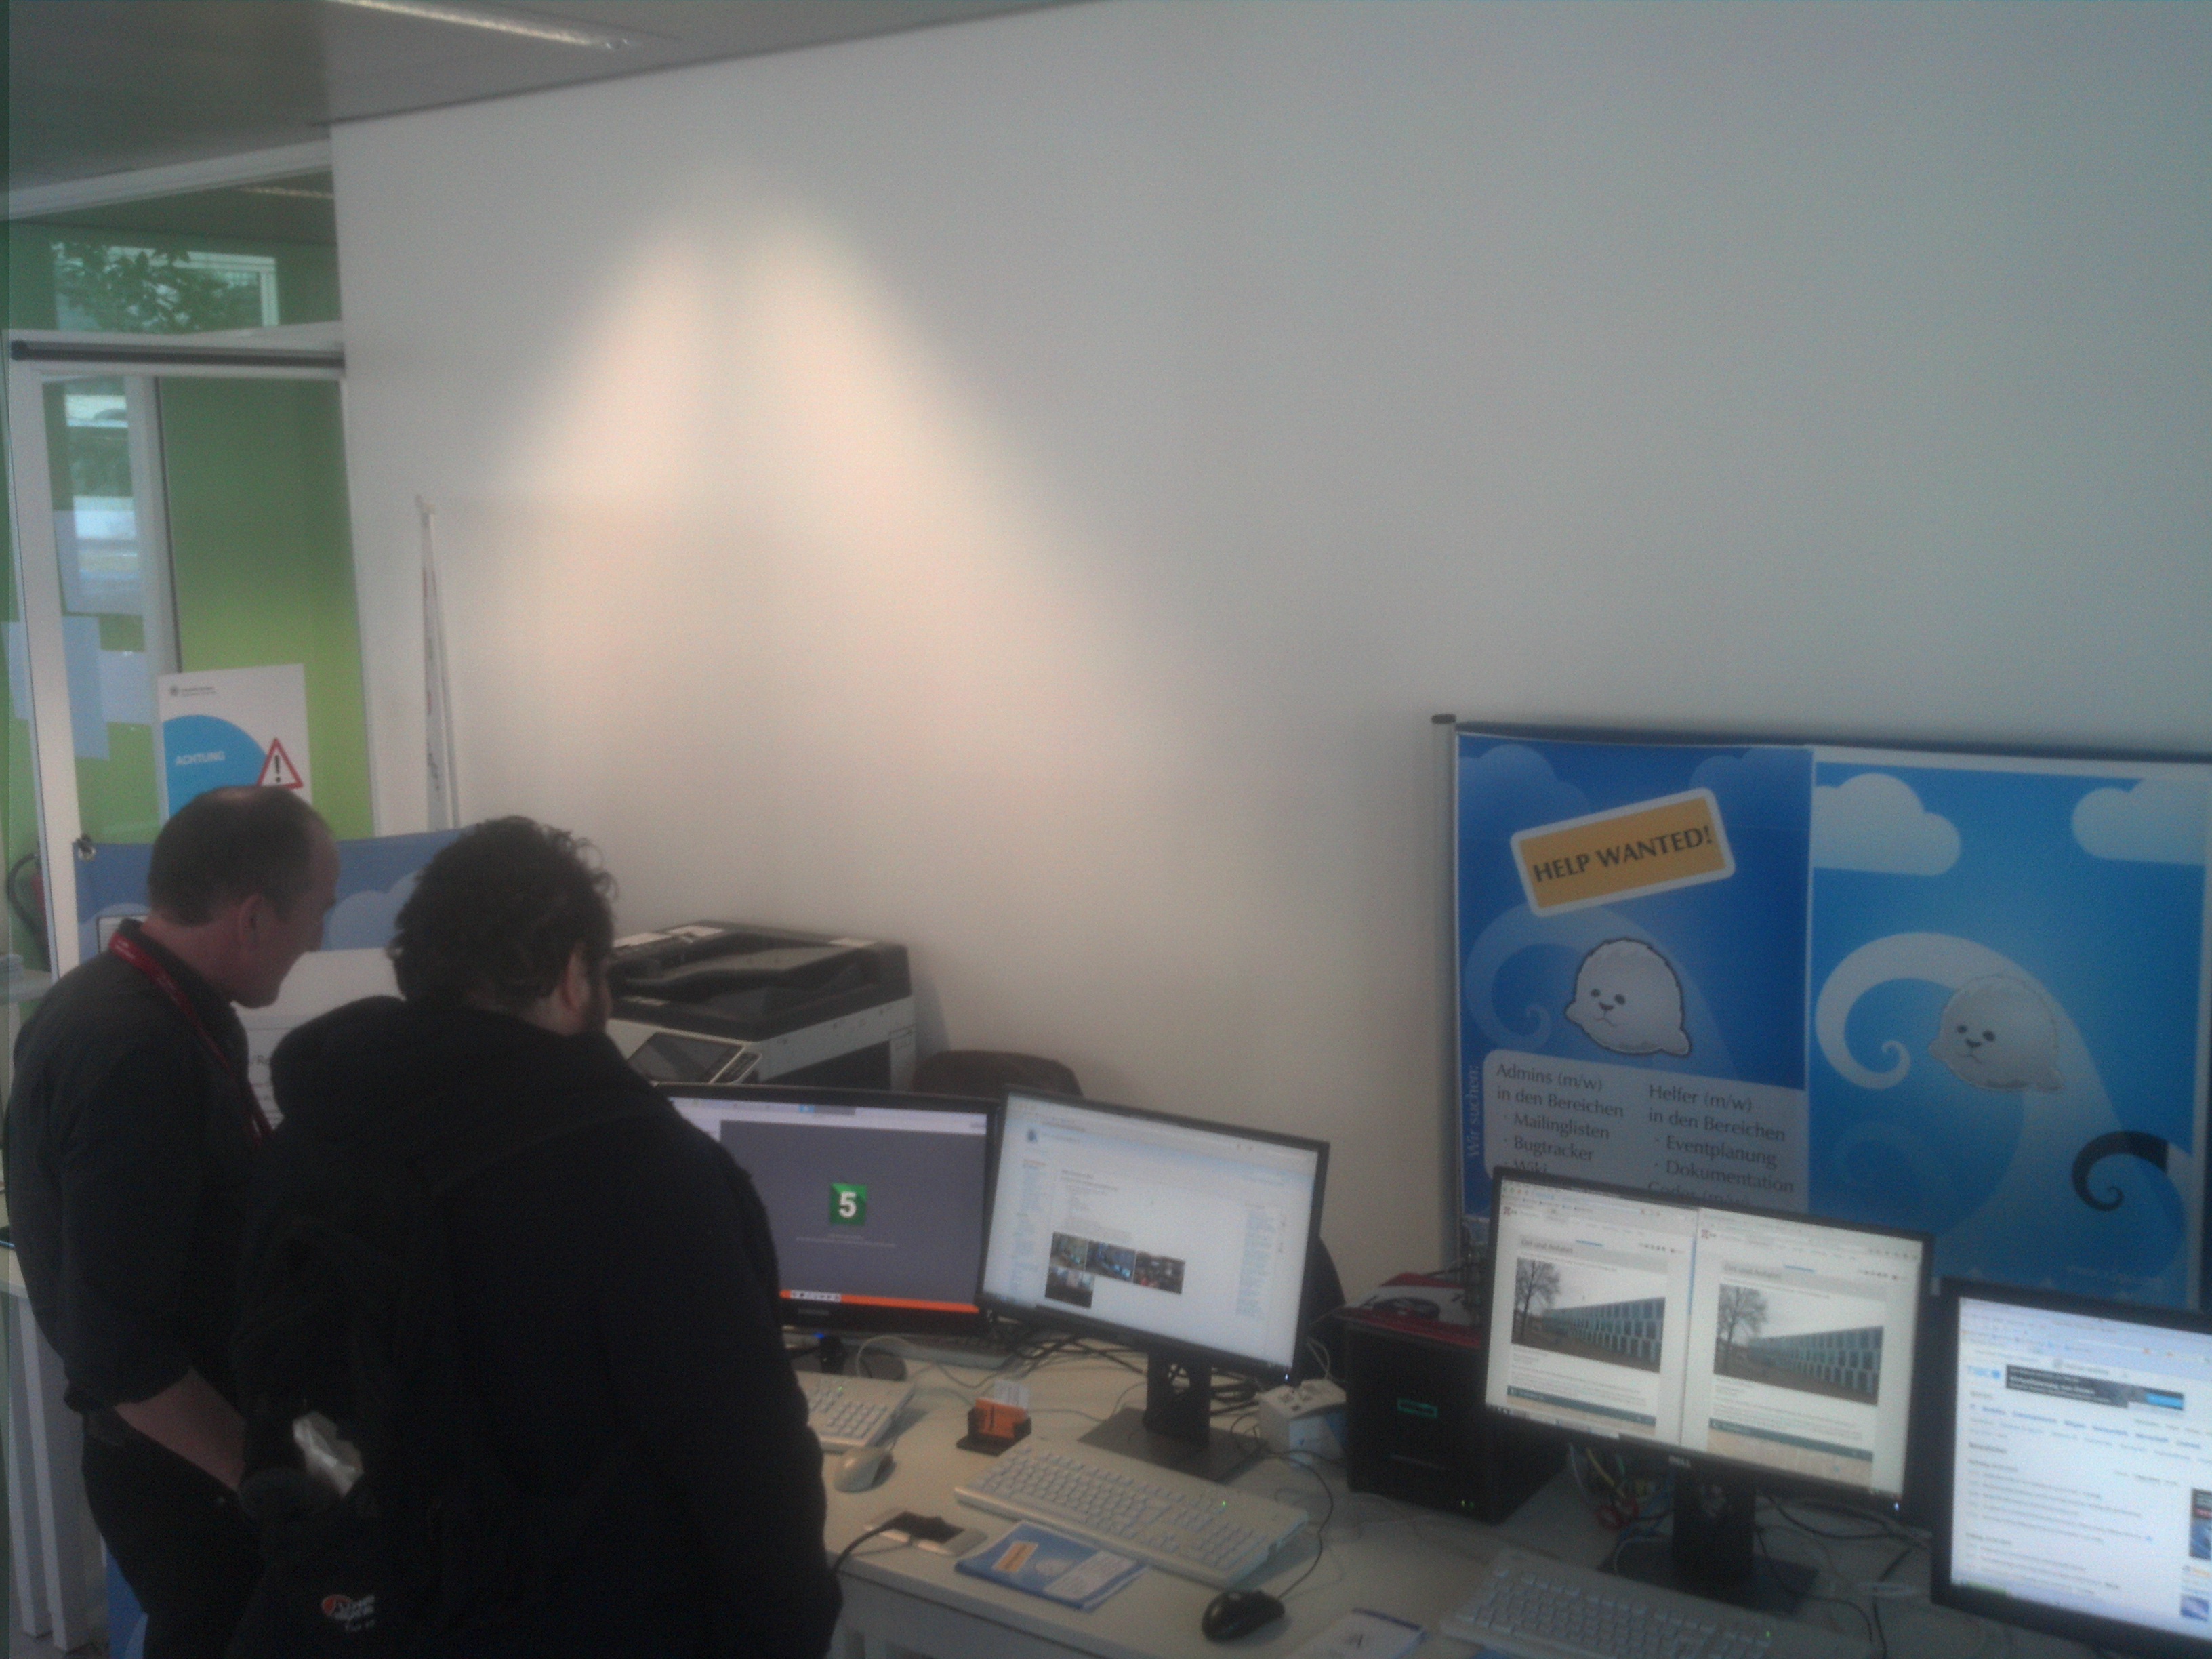 Karl-Heinz demo'ing LibreOffice via X2Go to a visitor